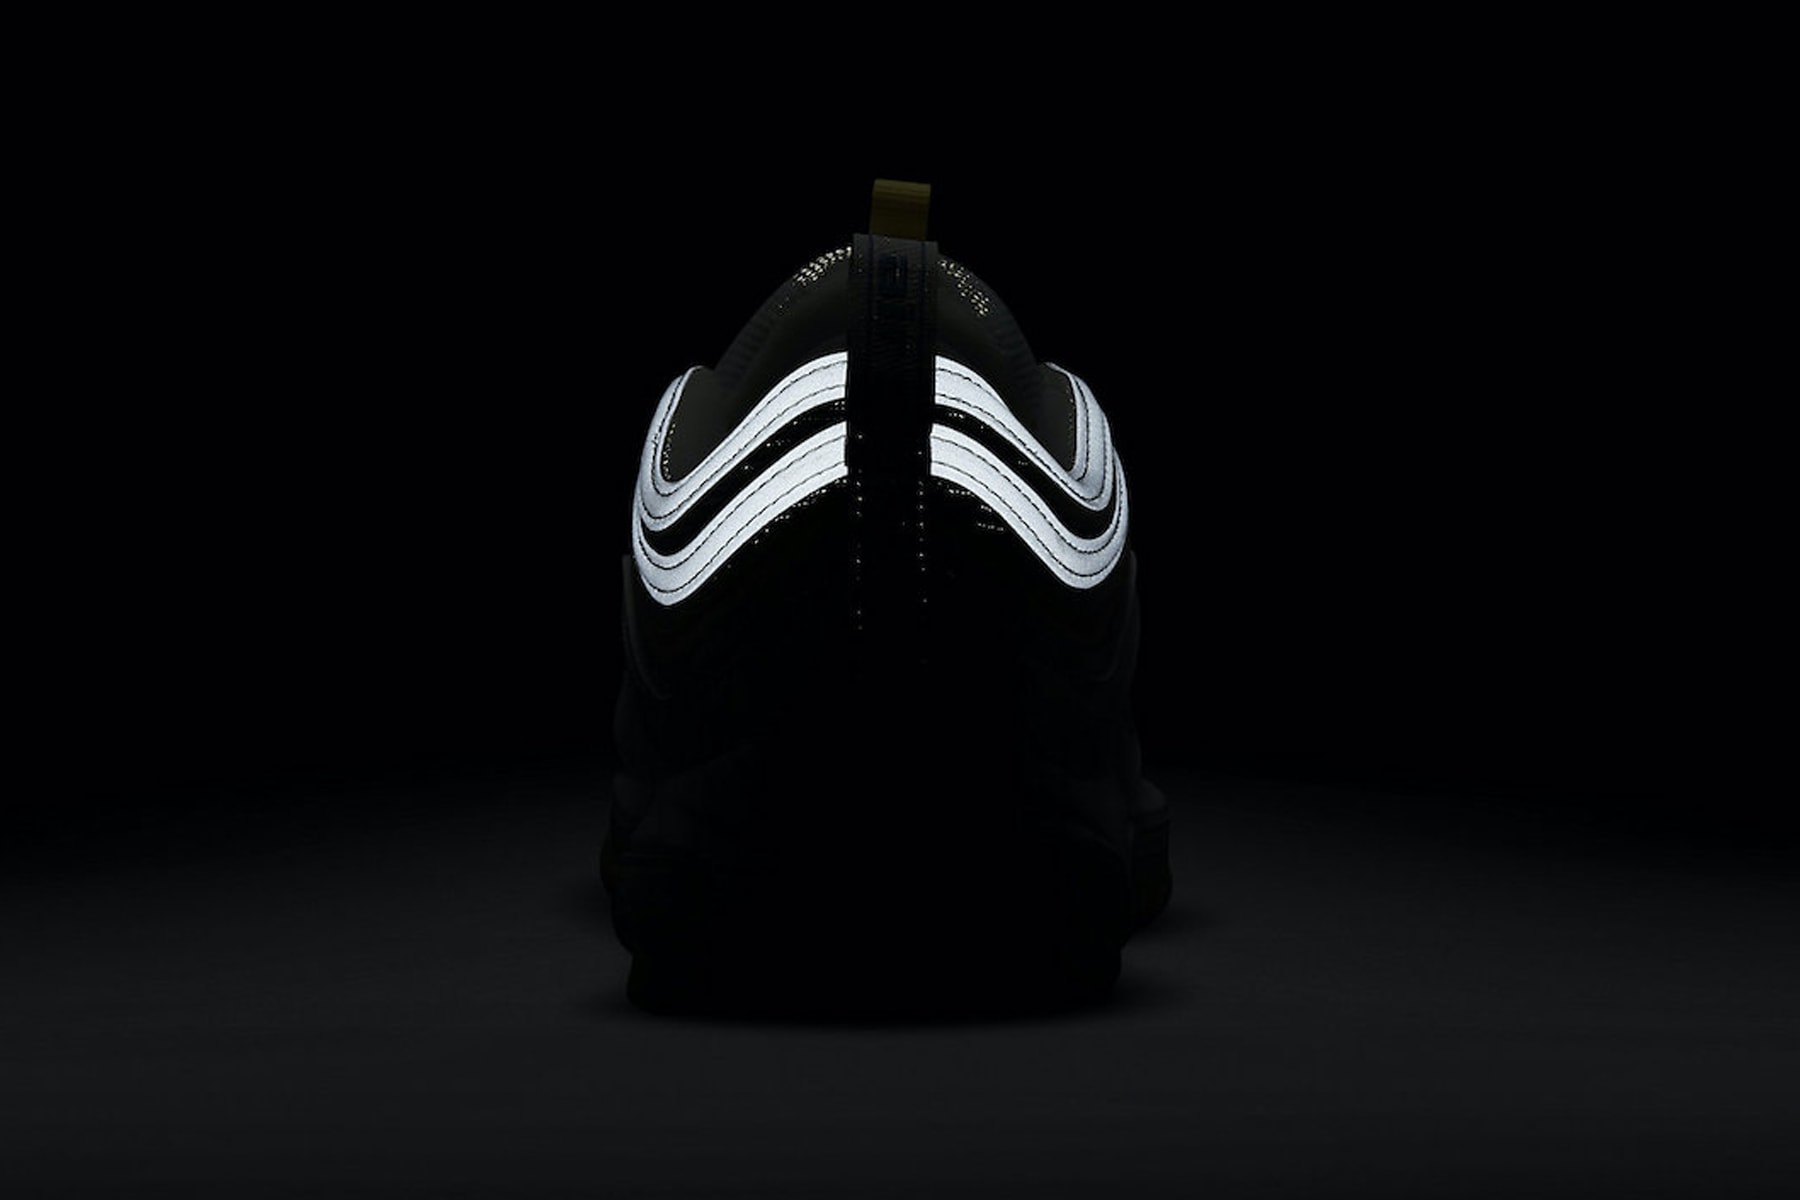 UNDEFEATED x UCLA x Nike Air Max 97 全新聯乘鞋款官方圖輯、發售日期正式公開